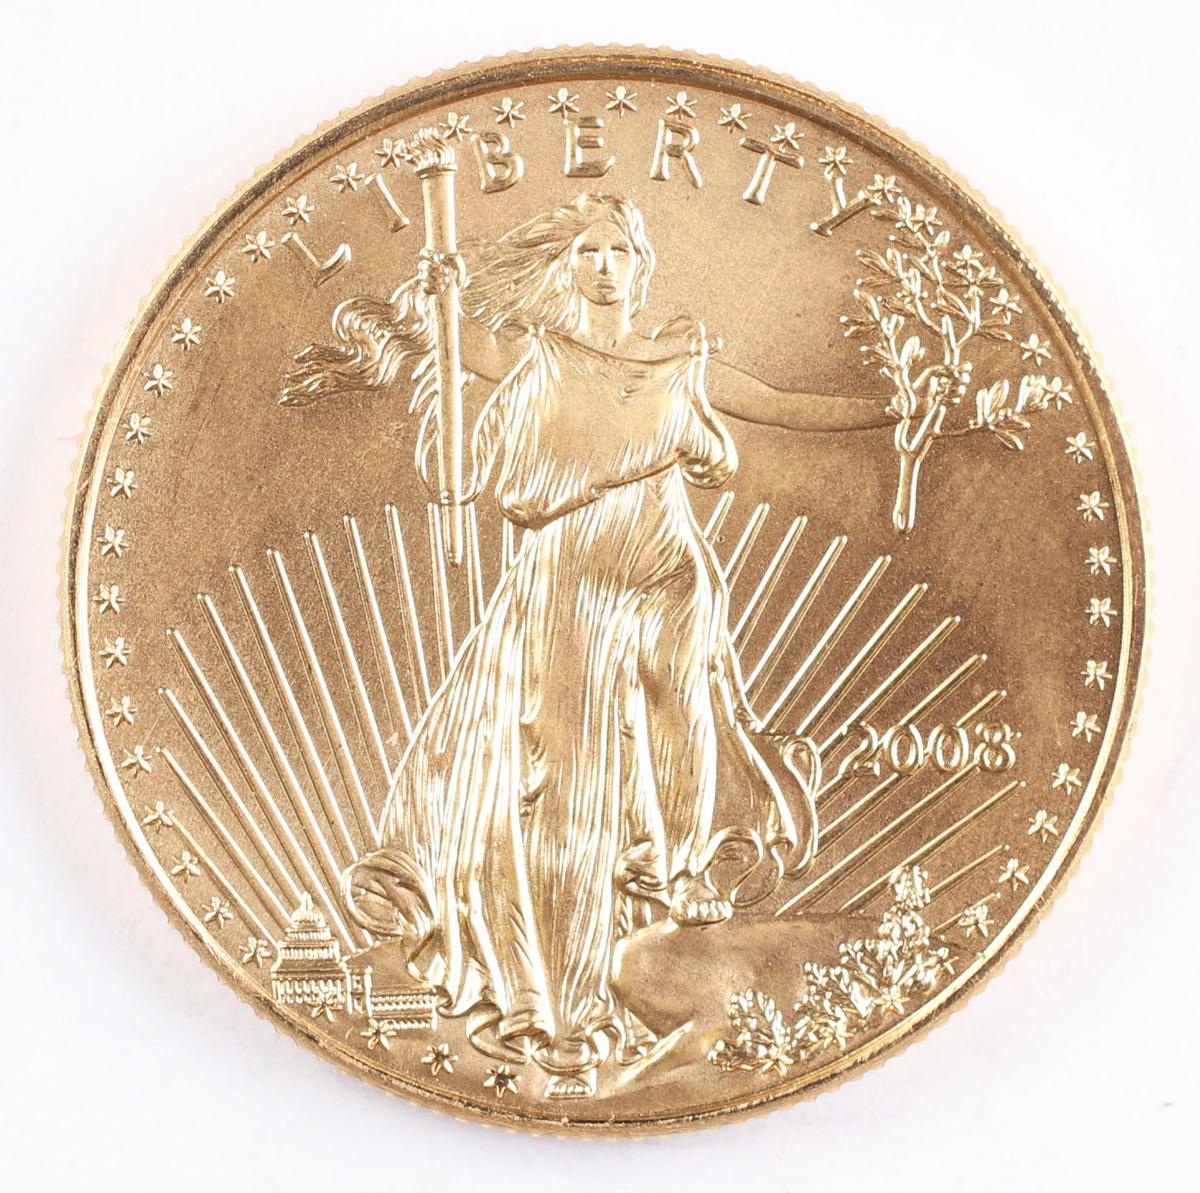 2008 $25 Gold Eagle 1/2 oz. Fine Gold